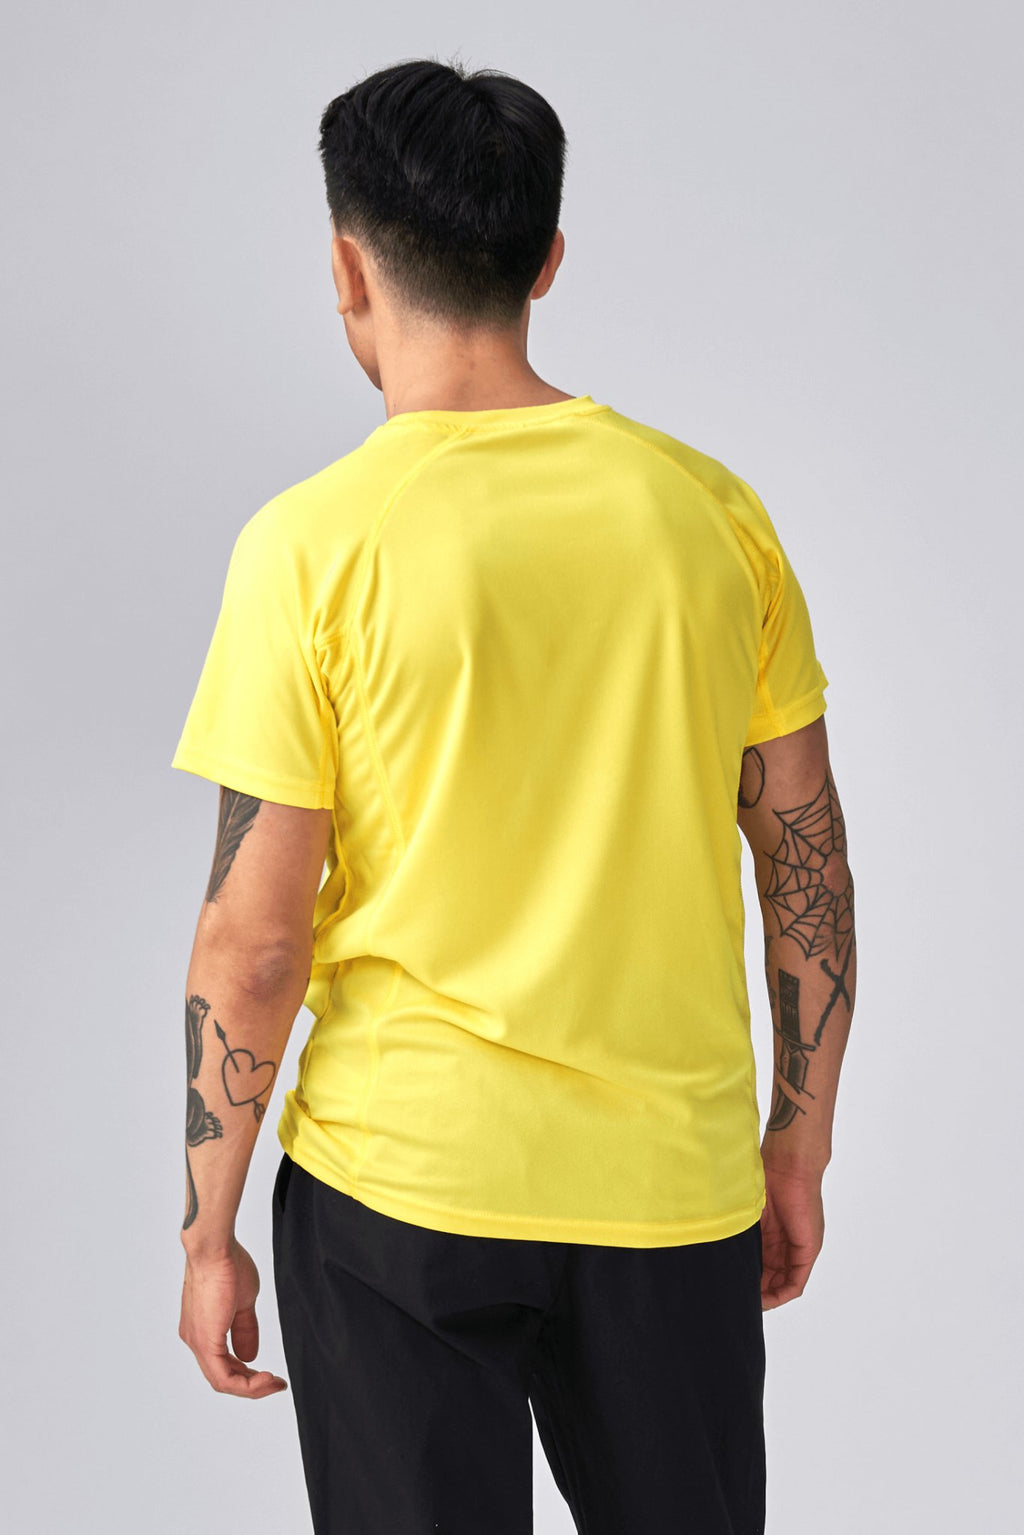 训练T恤 - 黄色